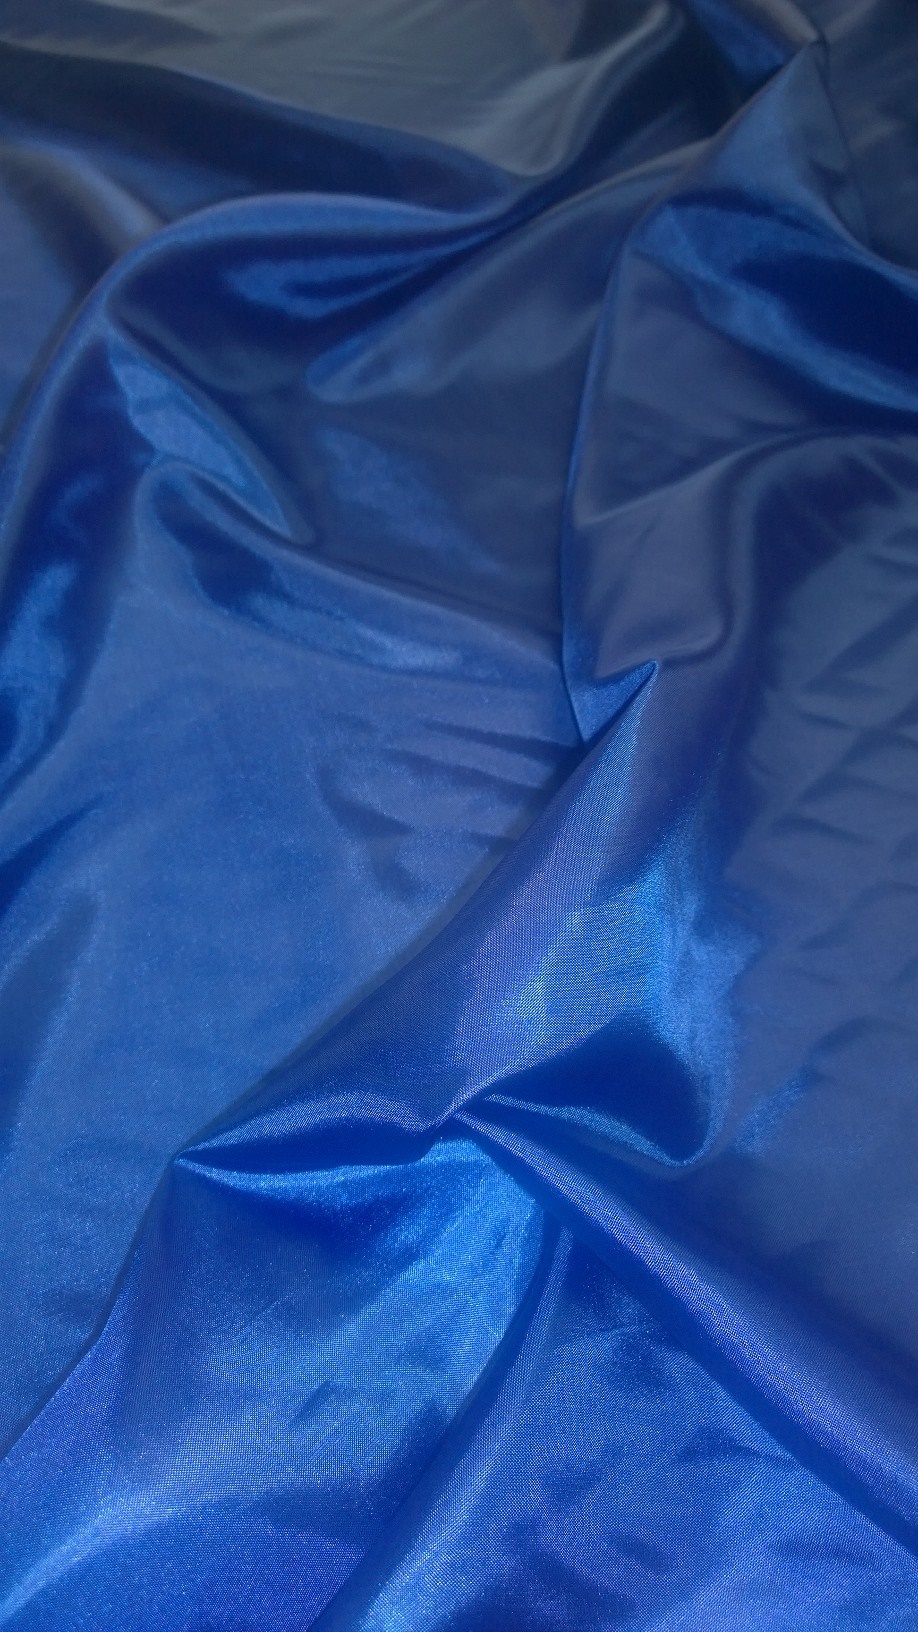 Royal Blue Habotai Fabric 60" By The Yard - 100% Polyester